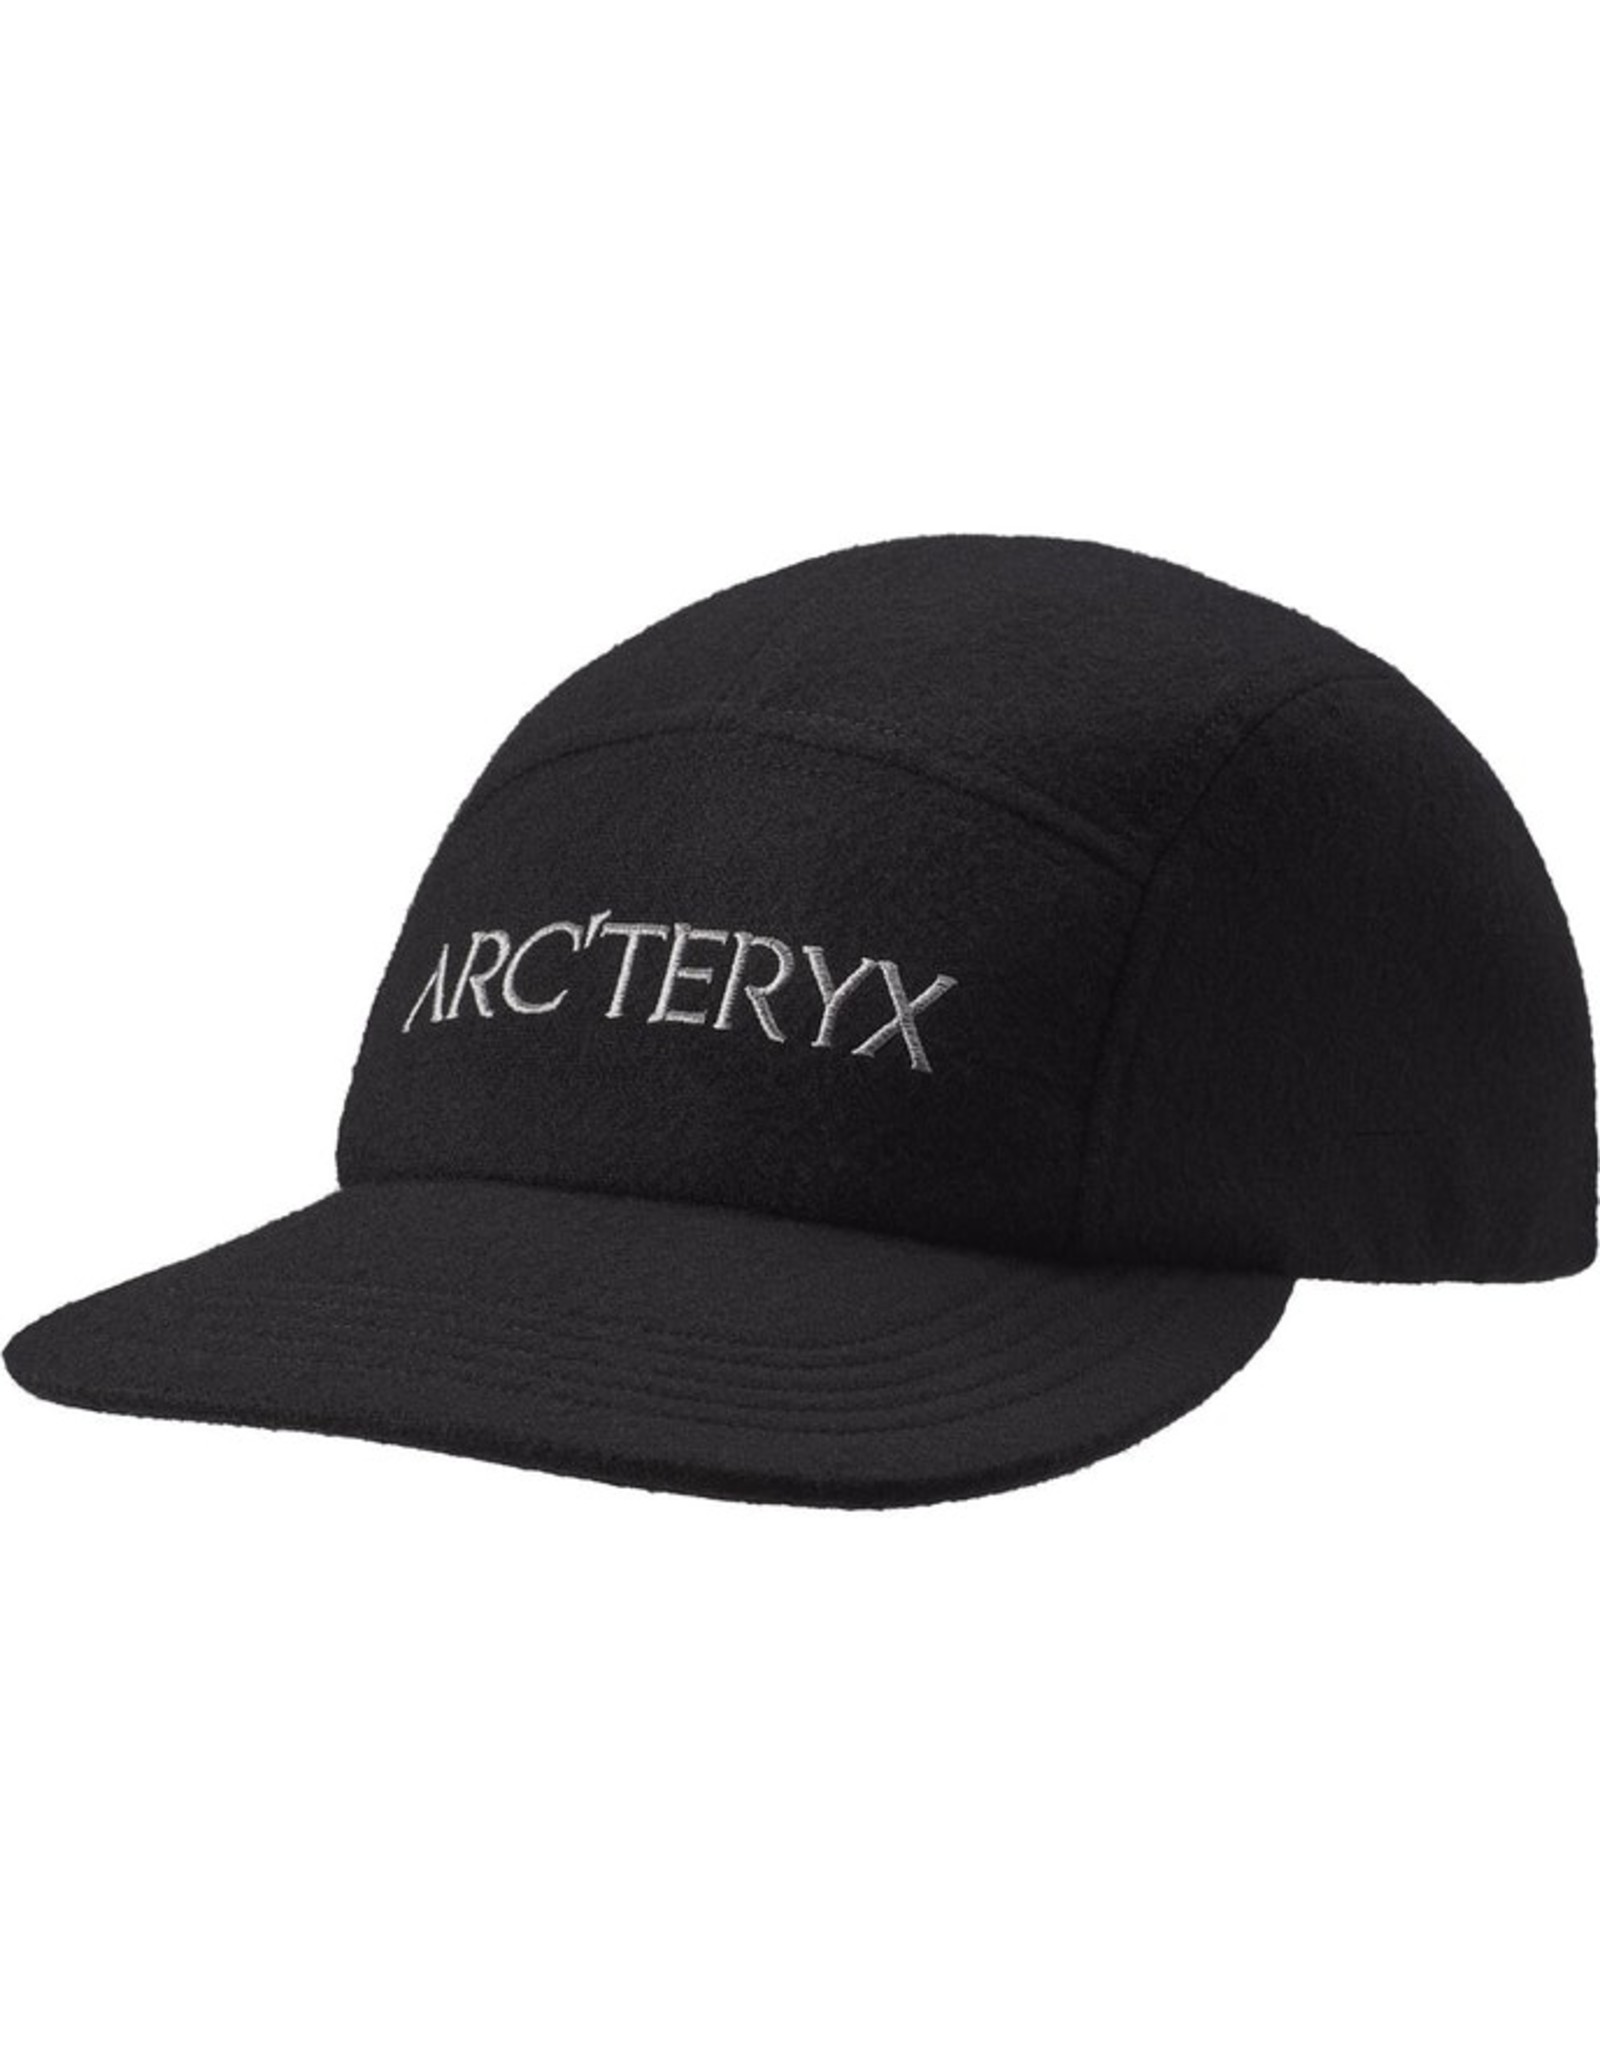 Arc'teryx Arc'teryx 5 Panel Wool Hat Black Heather